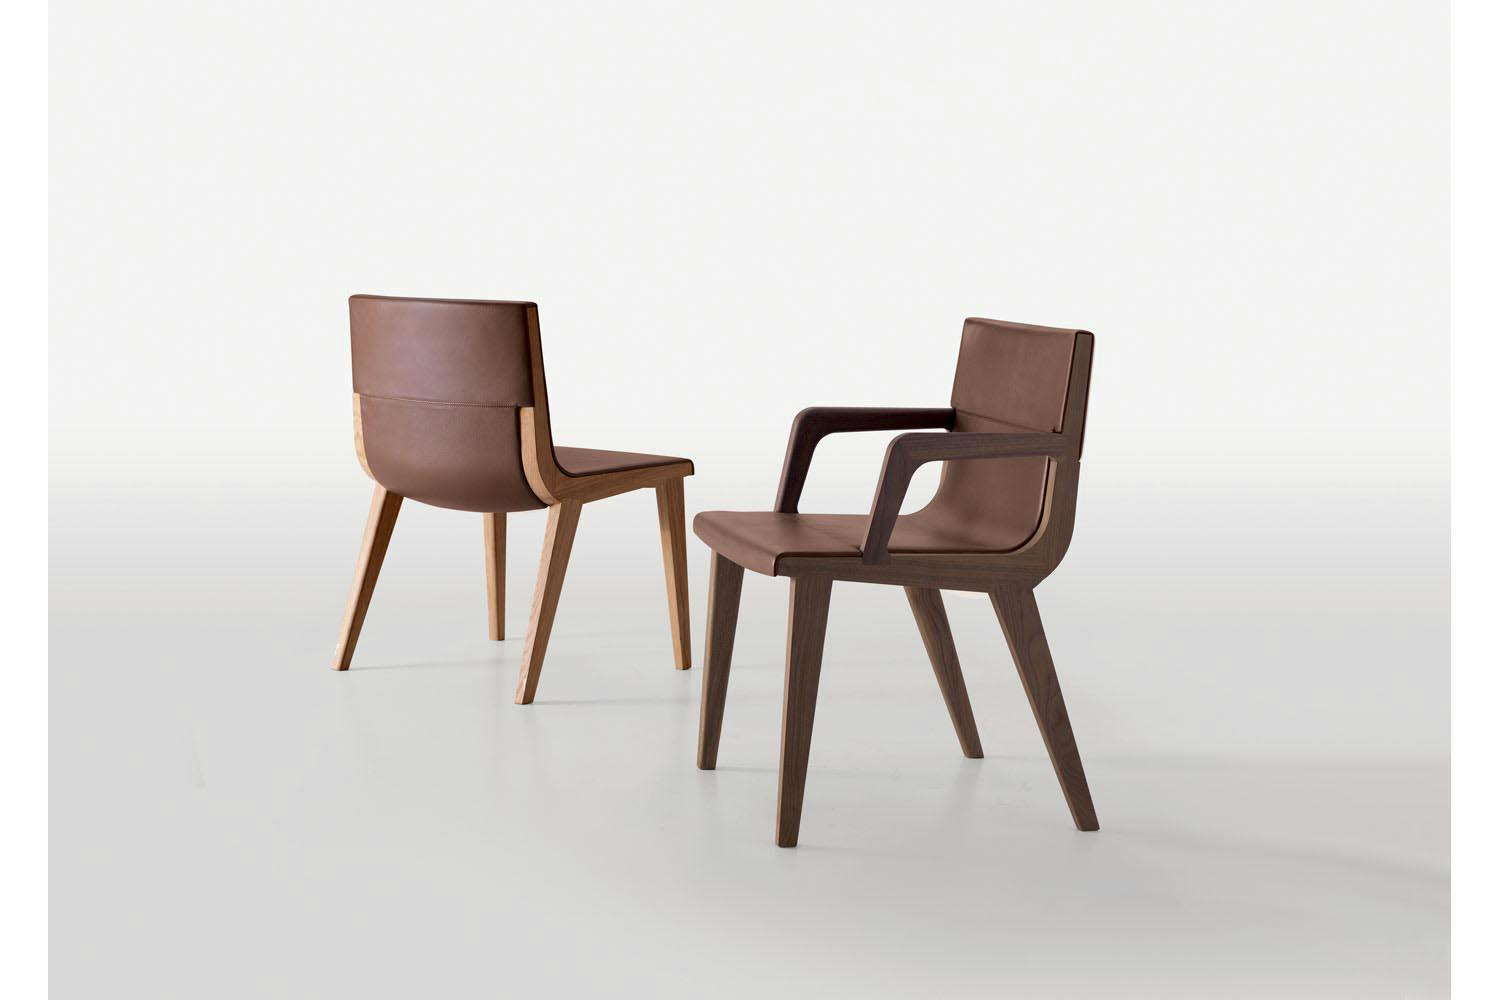 Acanto Chair by Antonio Citterio for Maxalto | Space Furniture - 1500 x 1000 jpeg 36kB